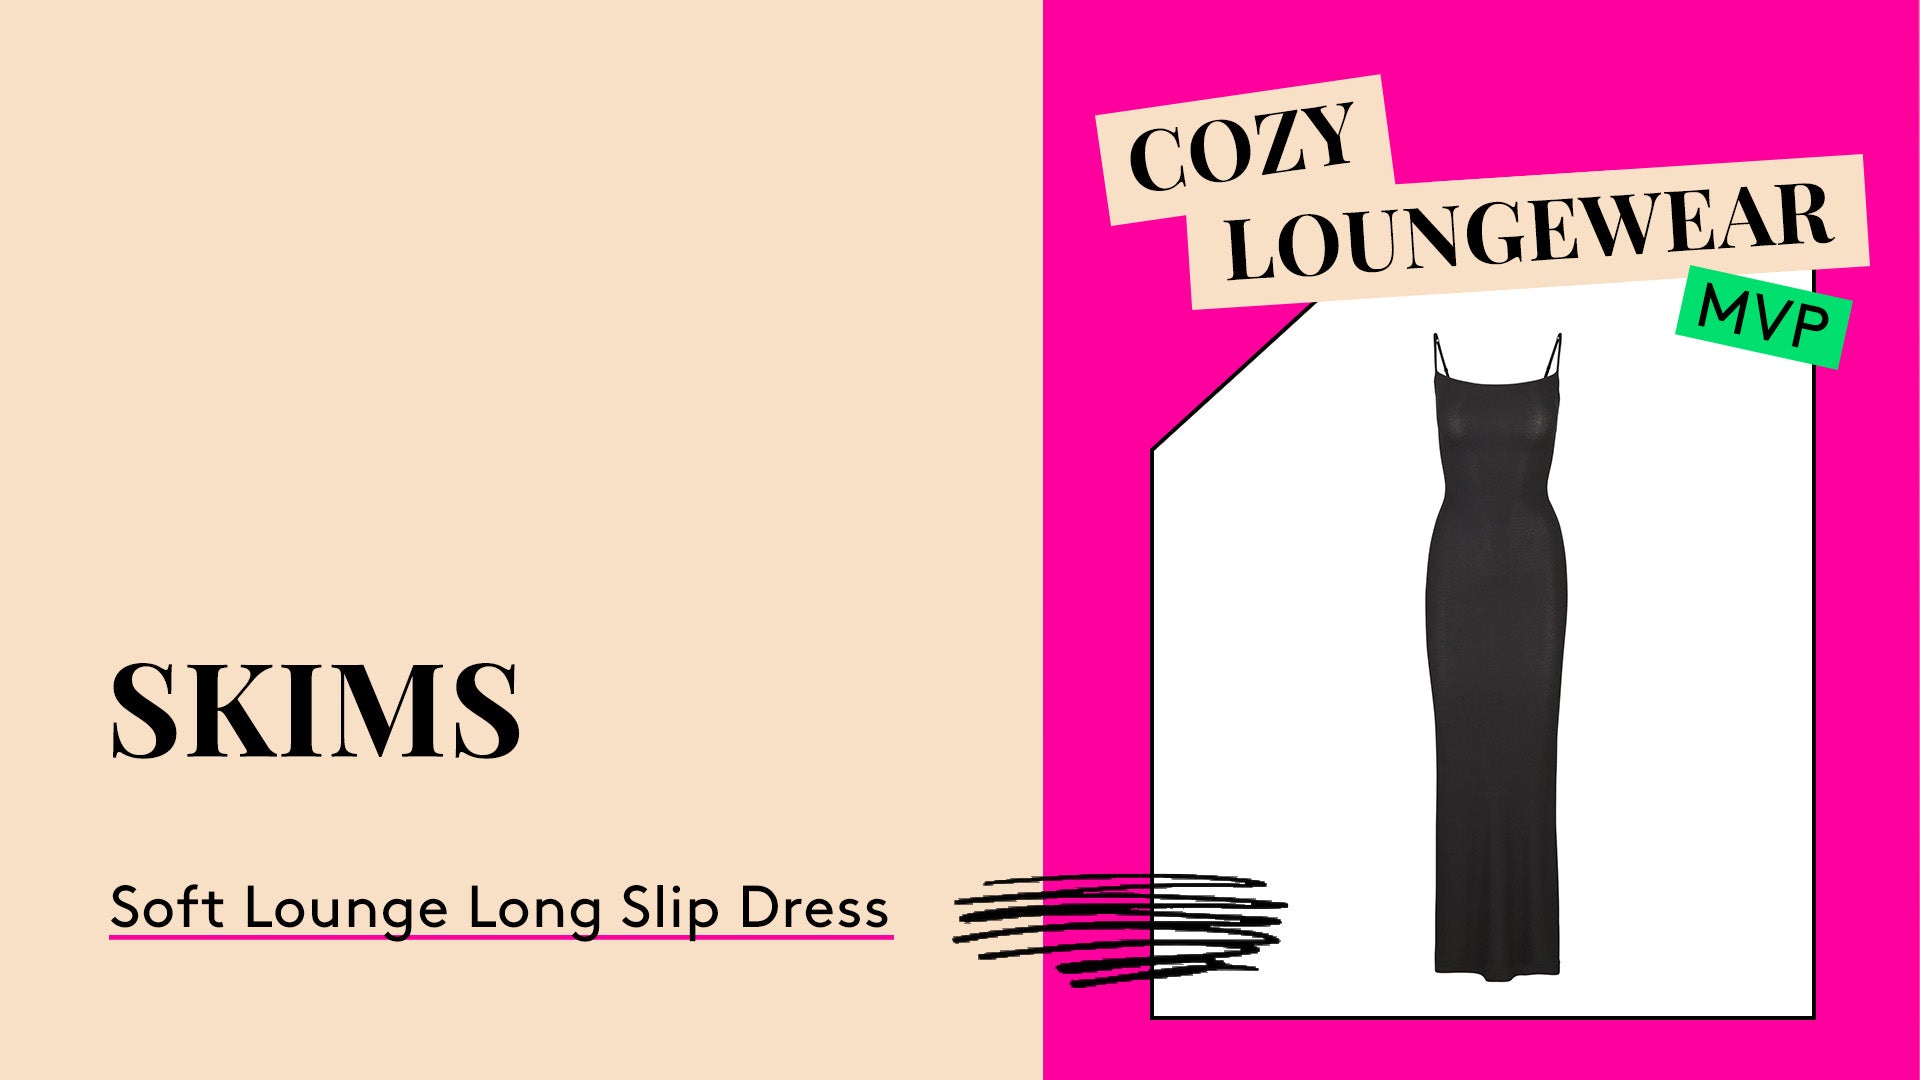 Cozy Loungewear MVP. Skims Soft Lounge Long Slip Dress.